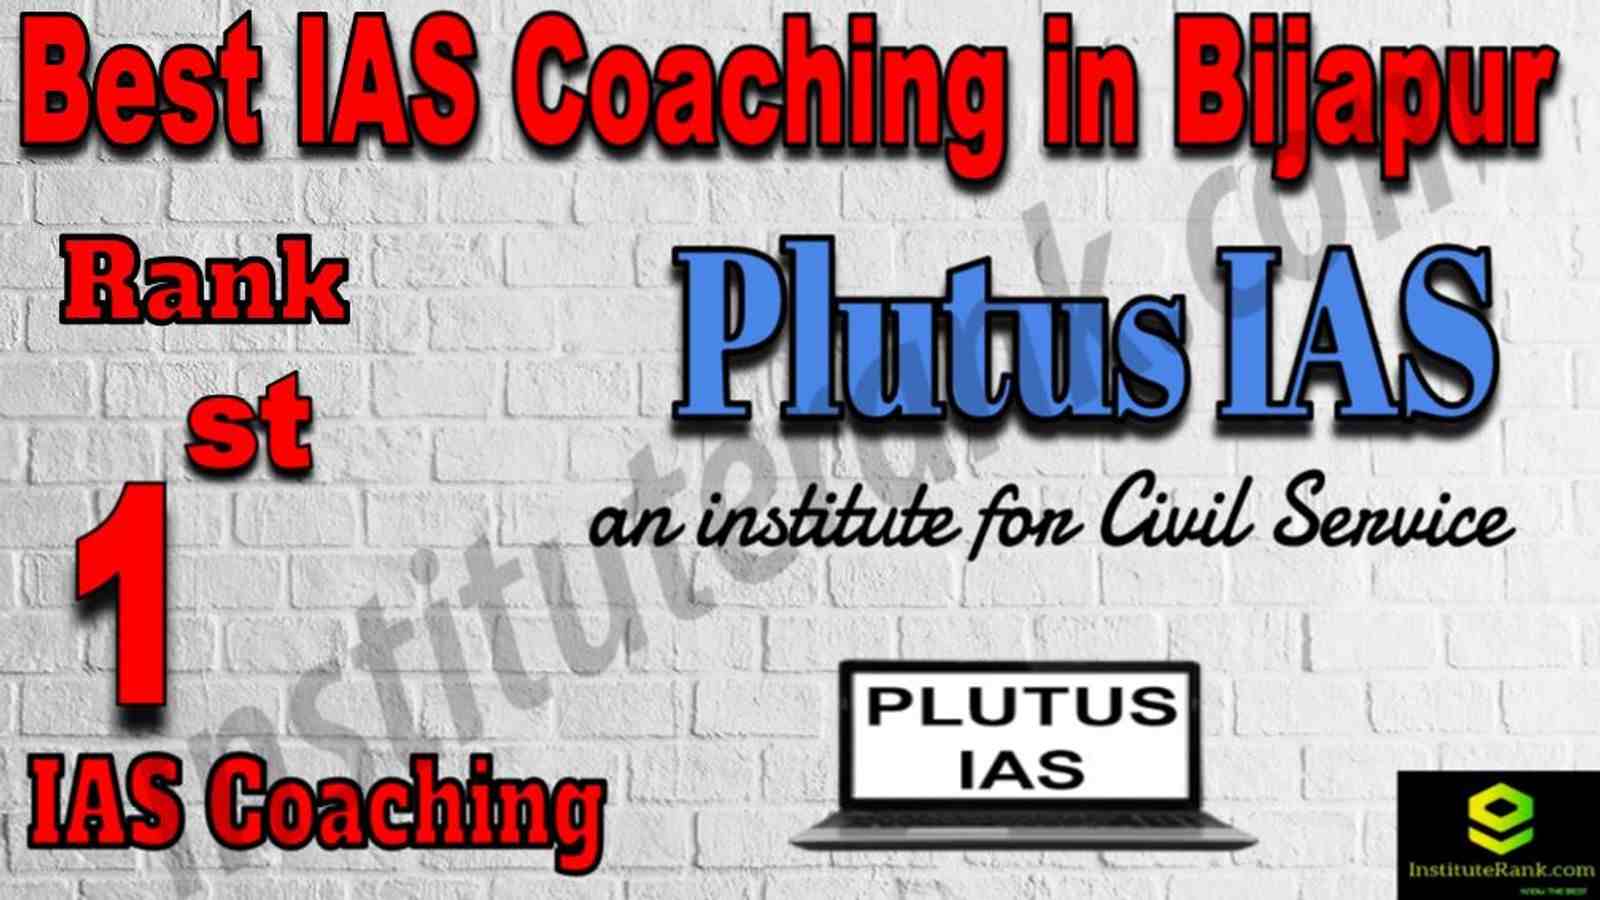 1st Best IAS Coaching in Bijapur